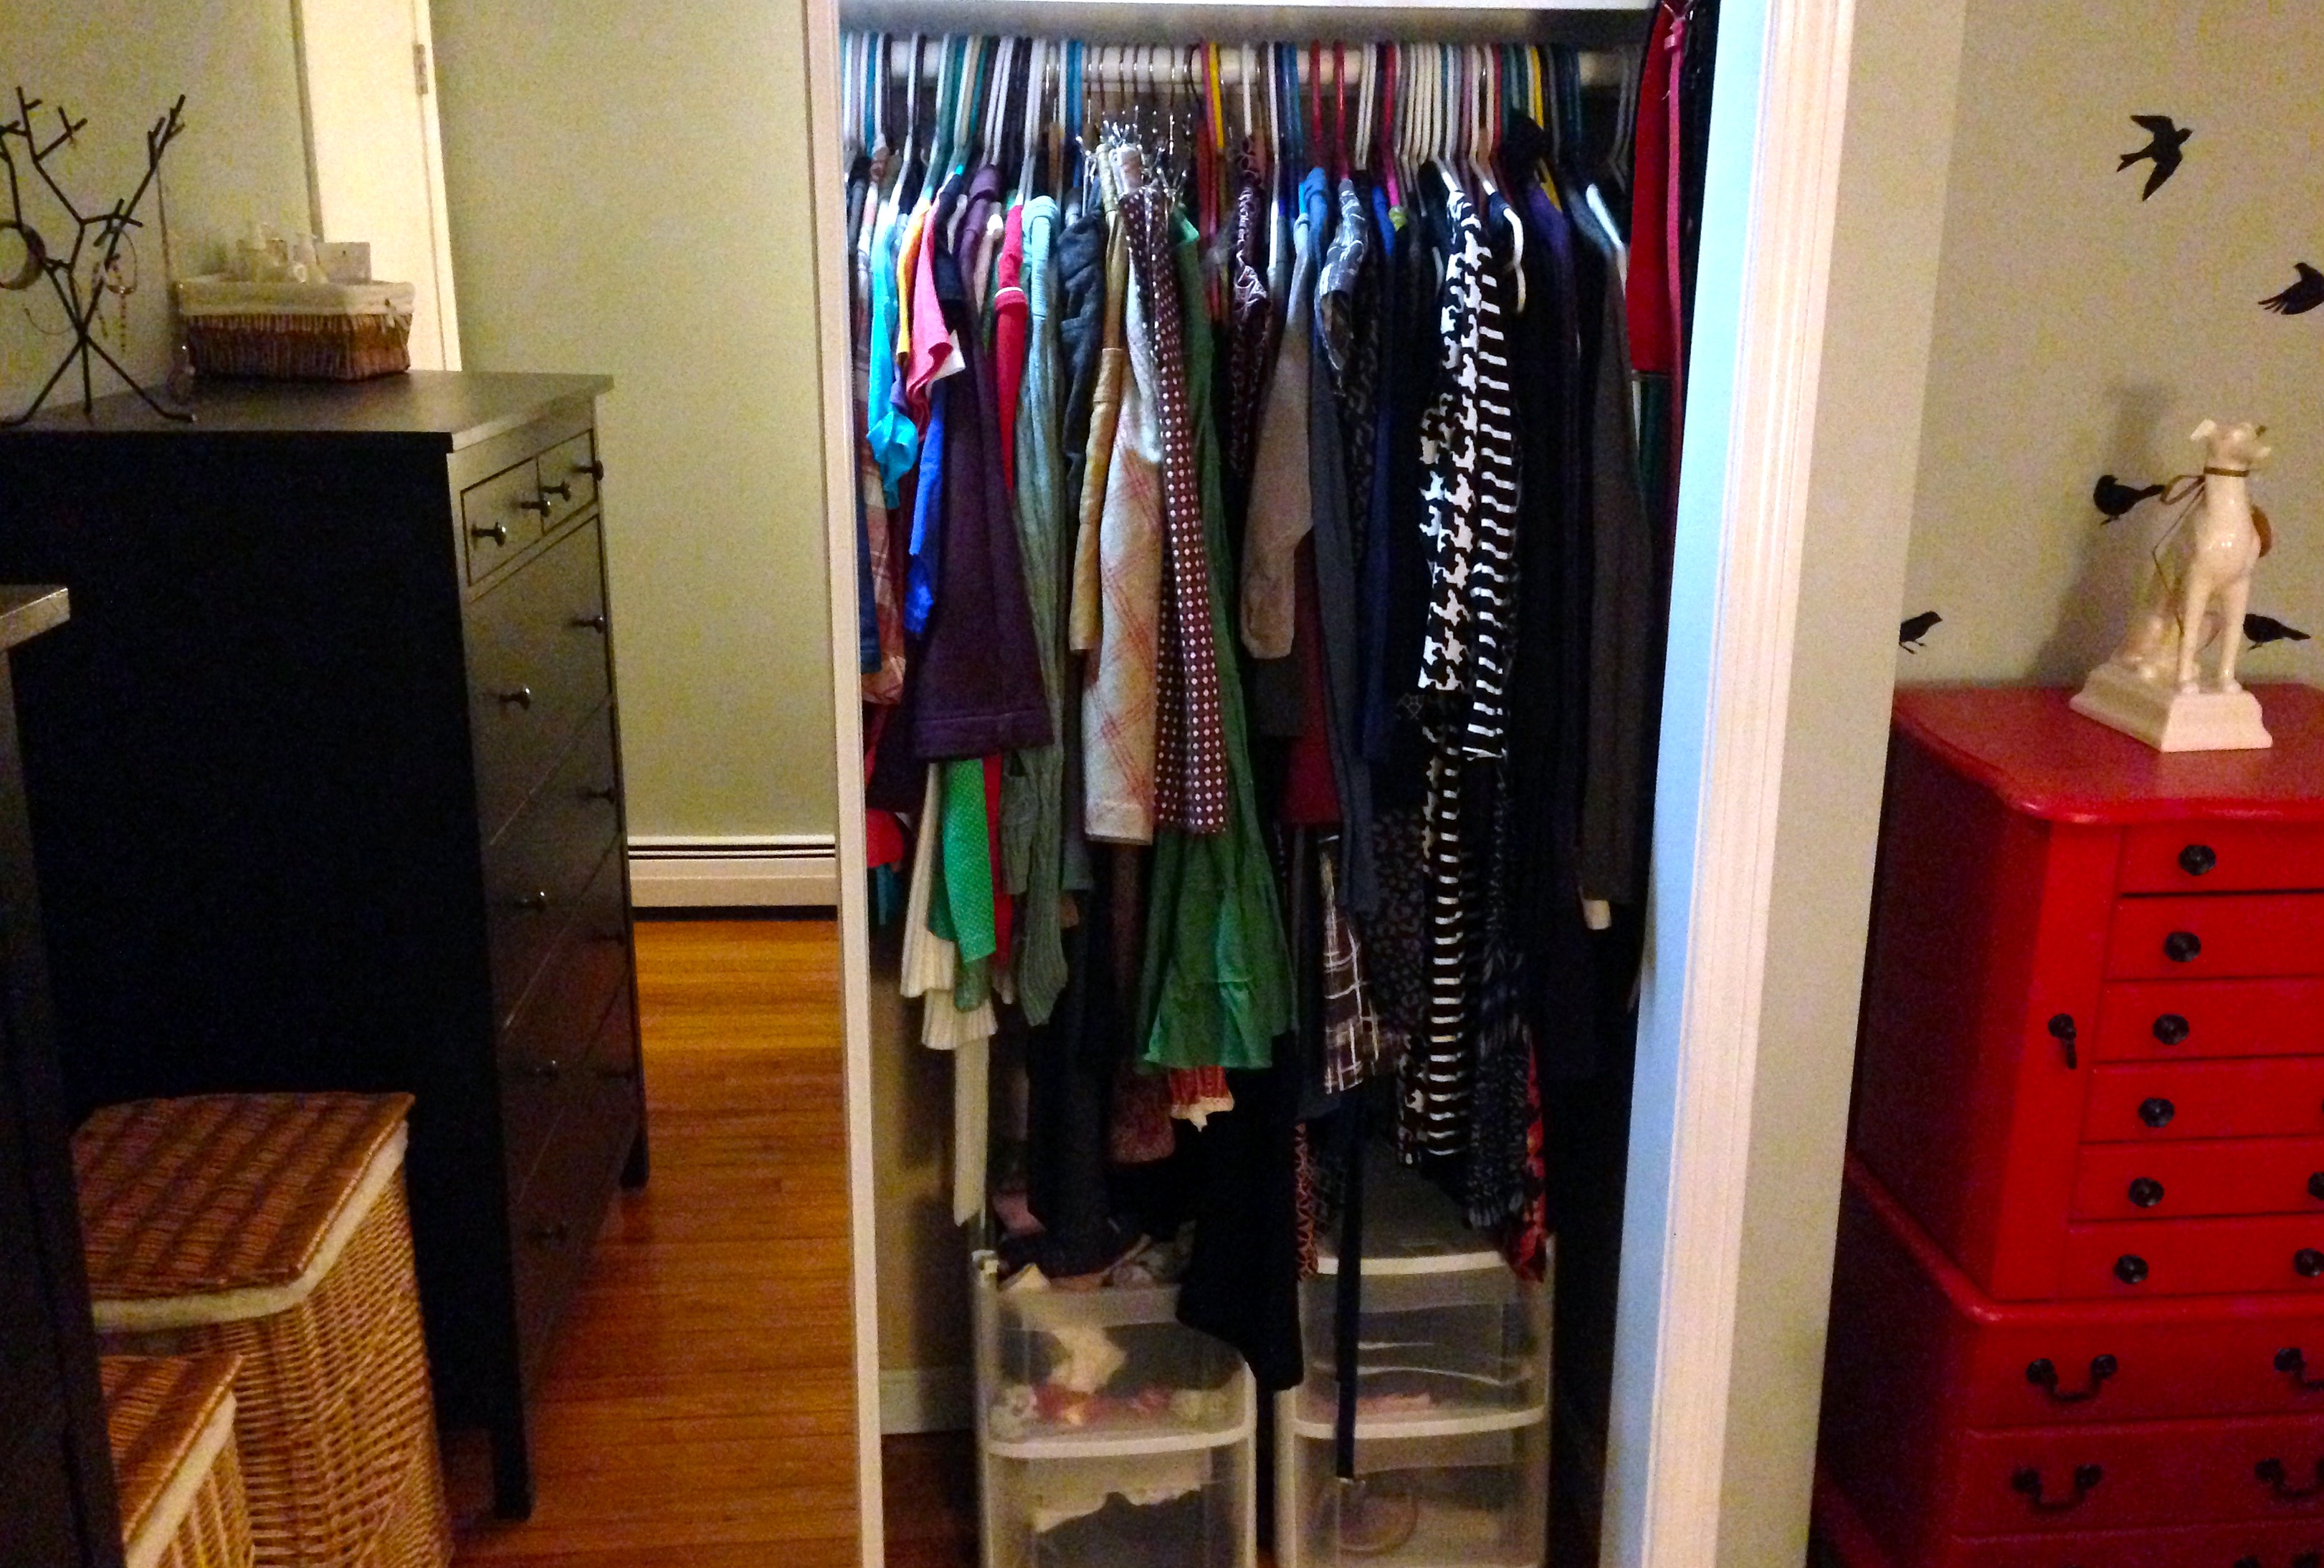 Our (now) organized closet